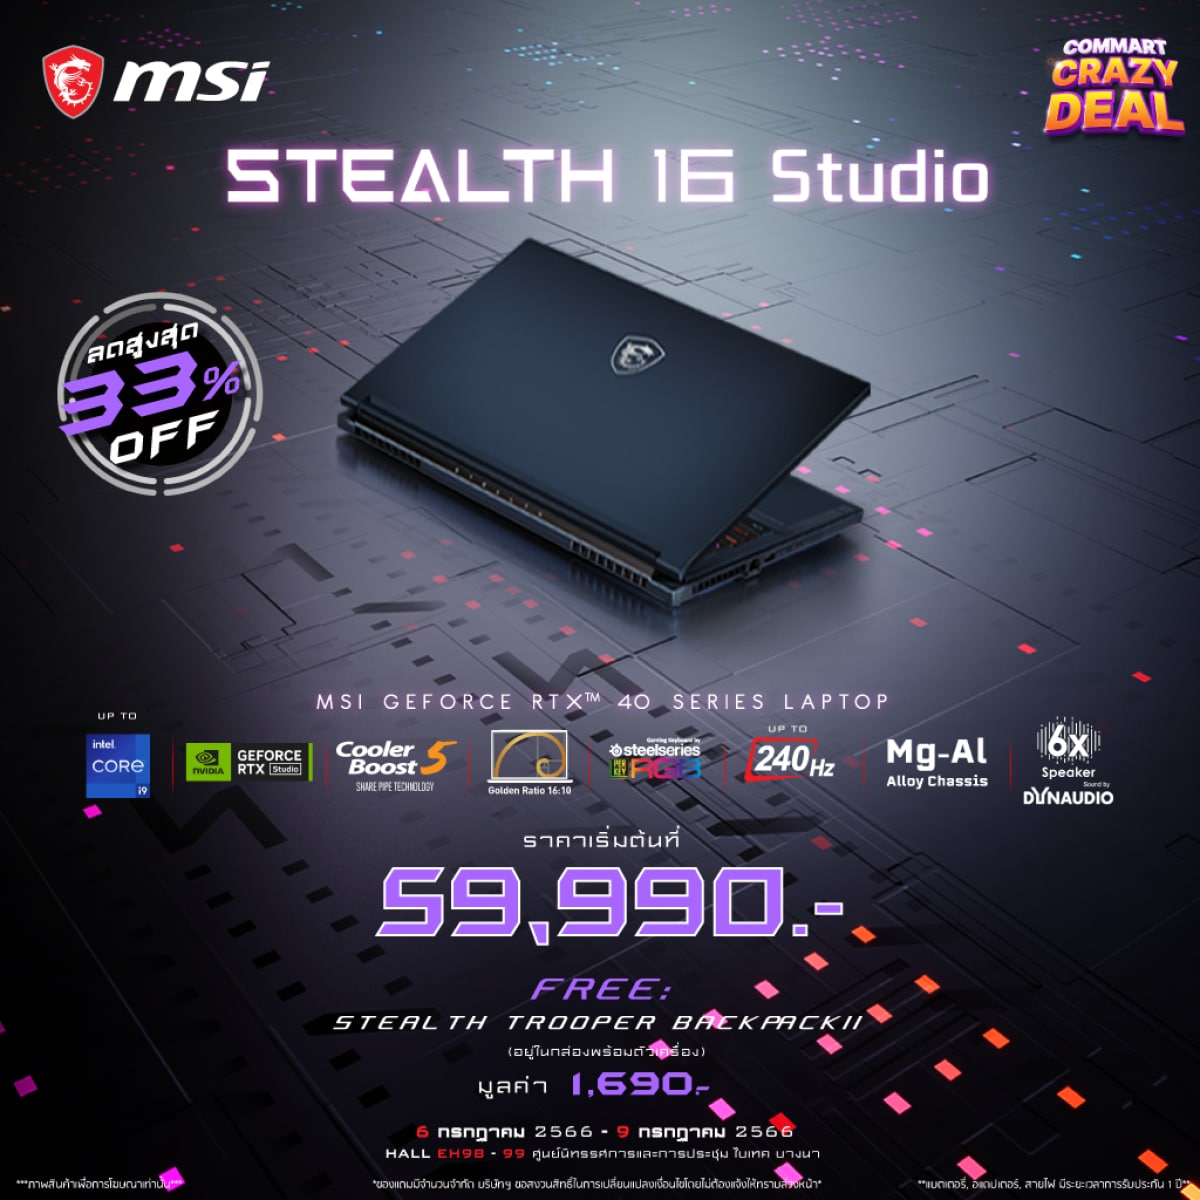 MSI Notebook Commart Stealth 16 Studio